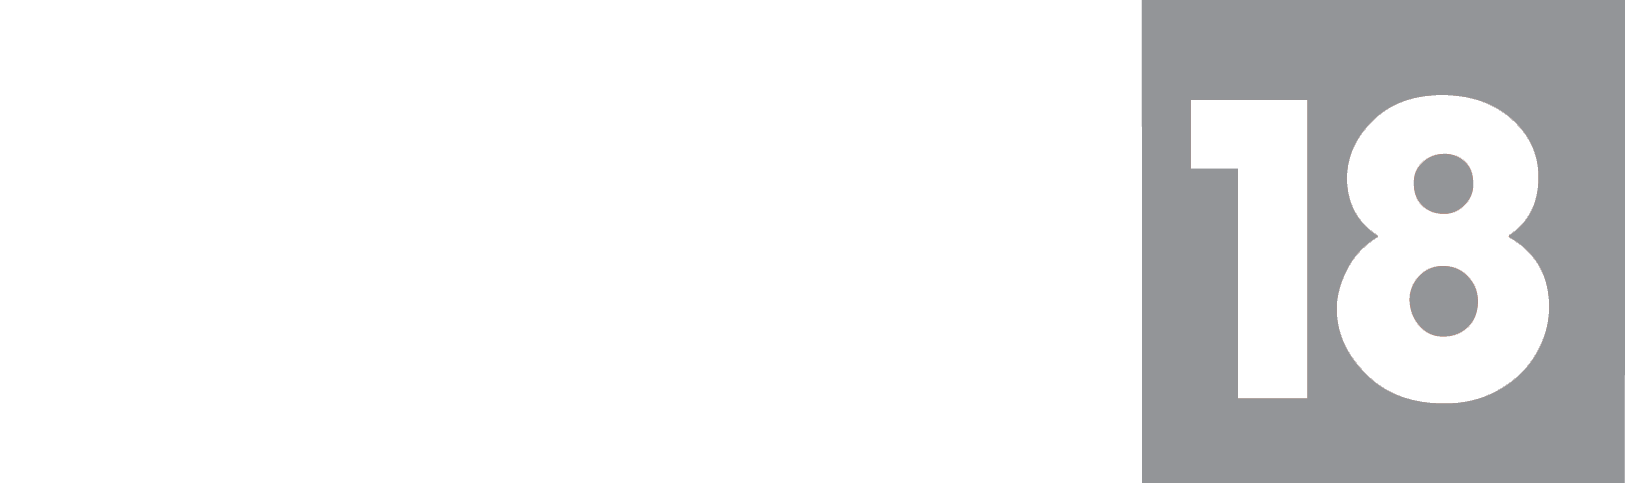 network 18 white logo